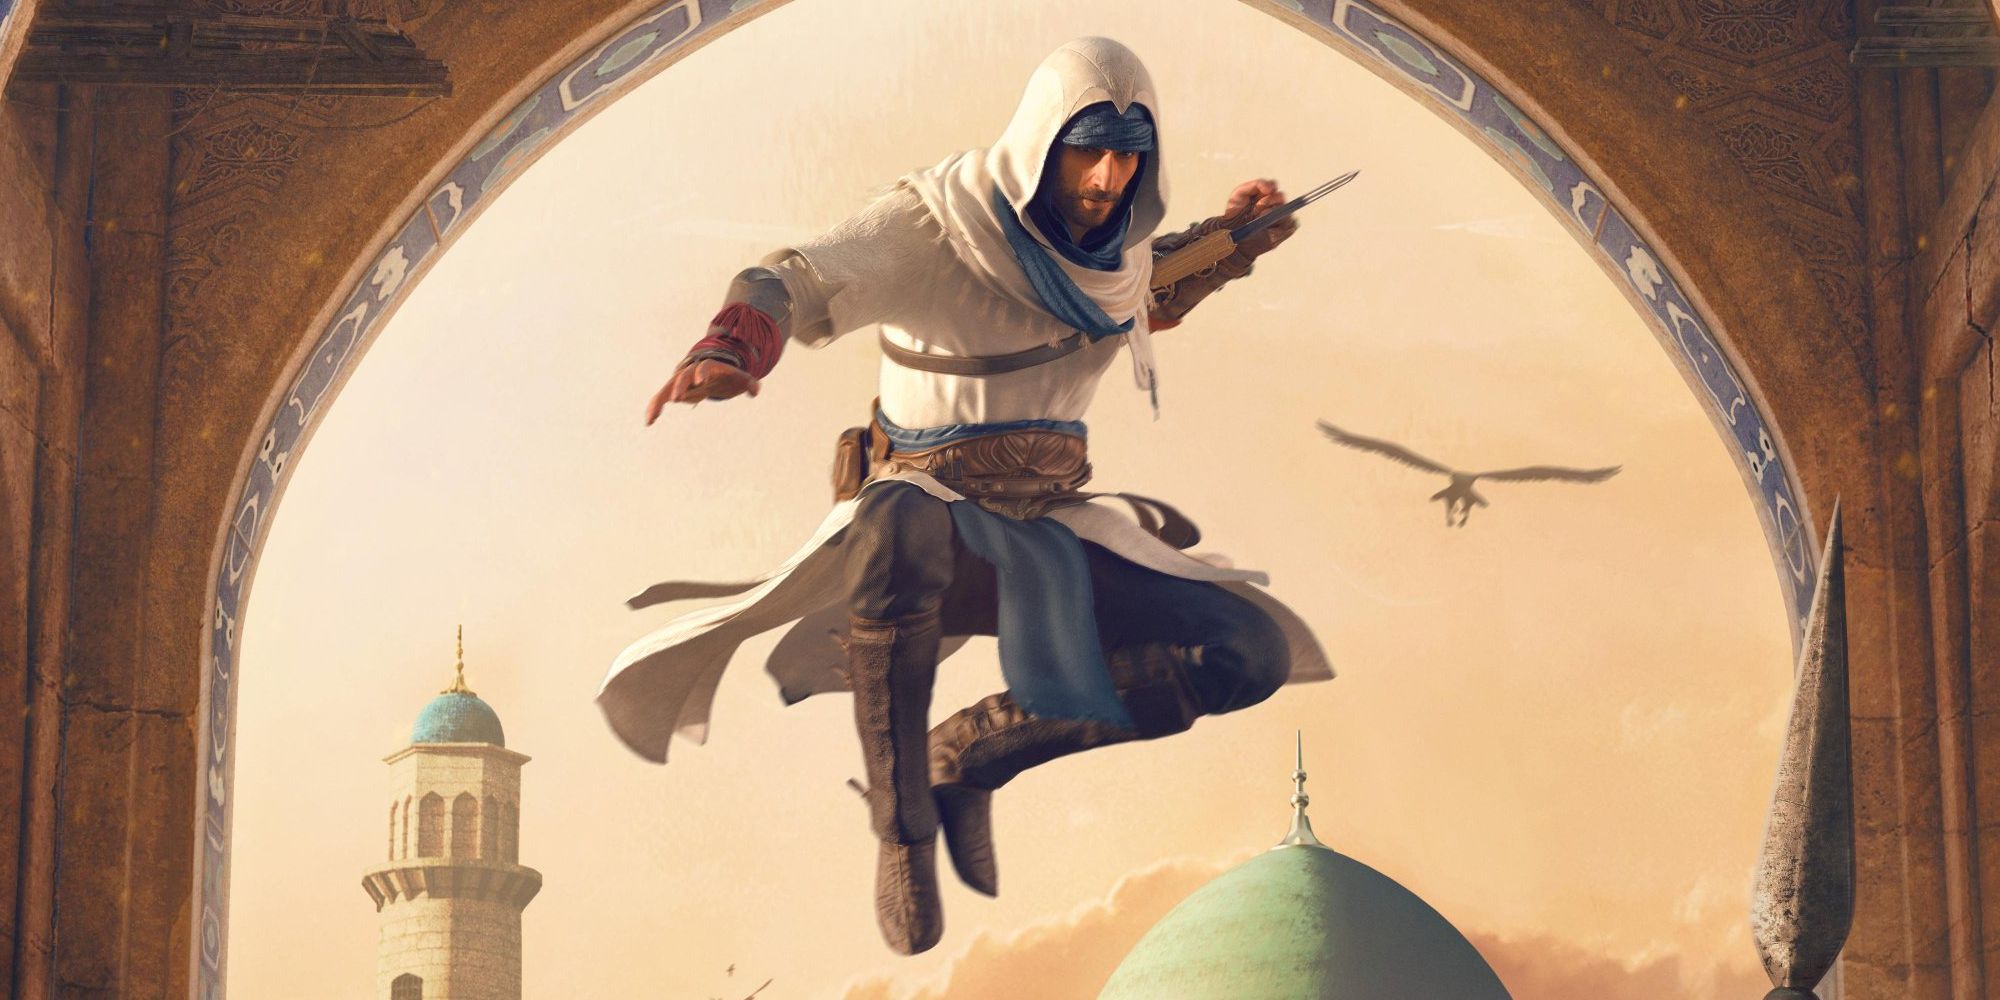 Assassins Creed Mirage #assassinscreedmirage #assassinscreed